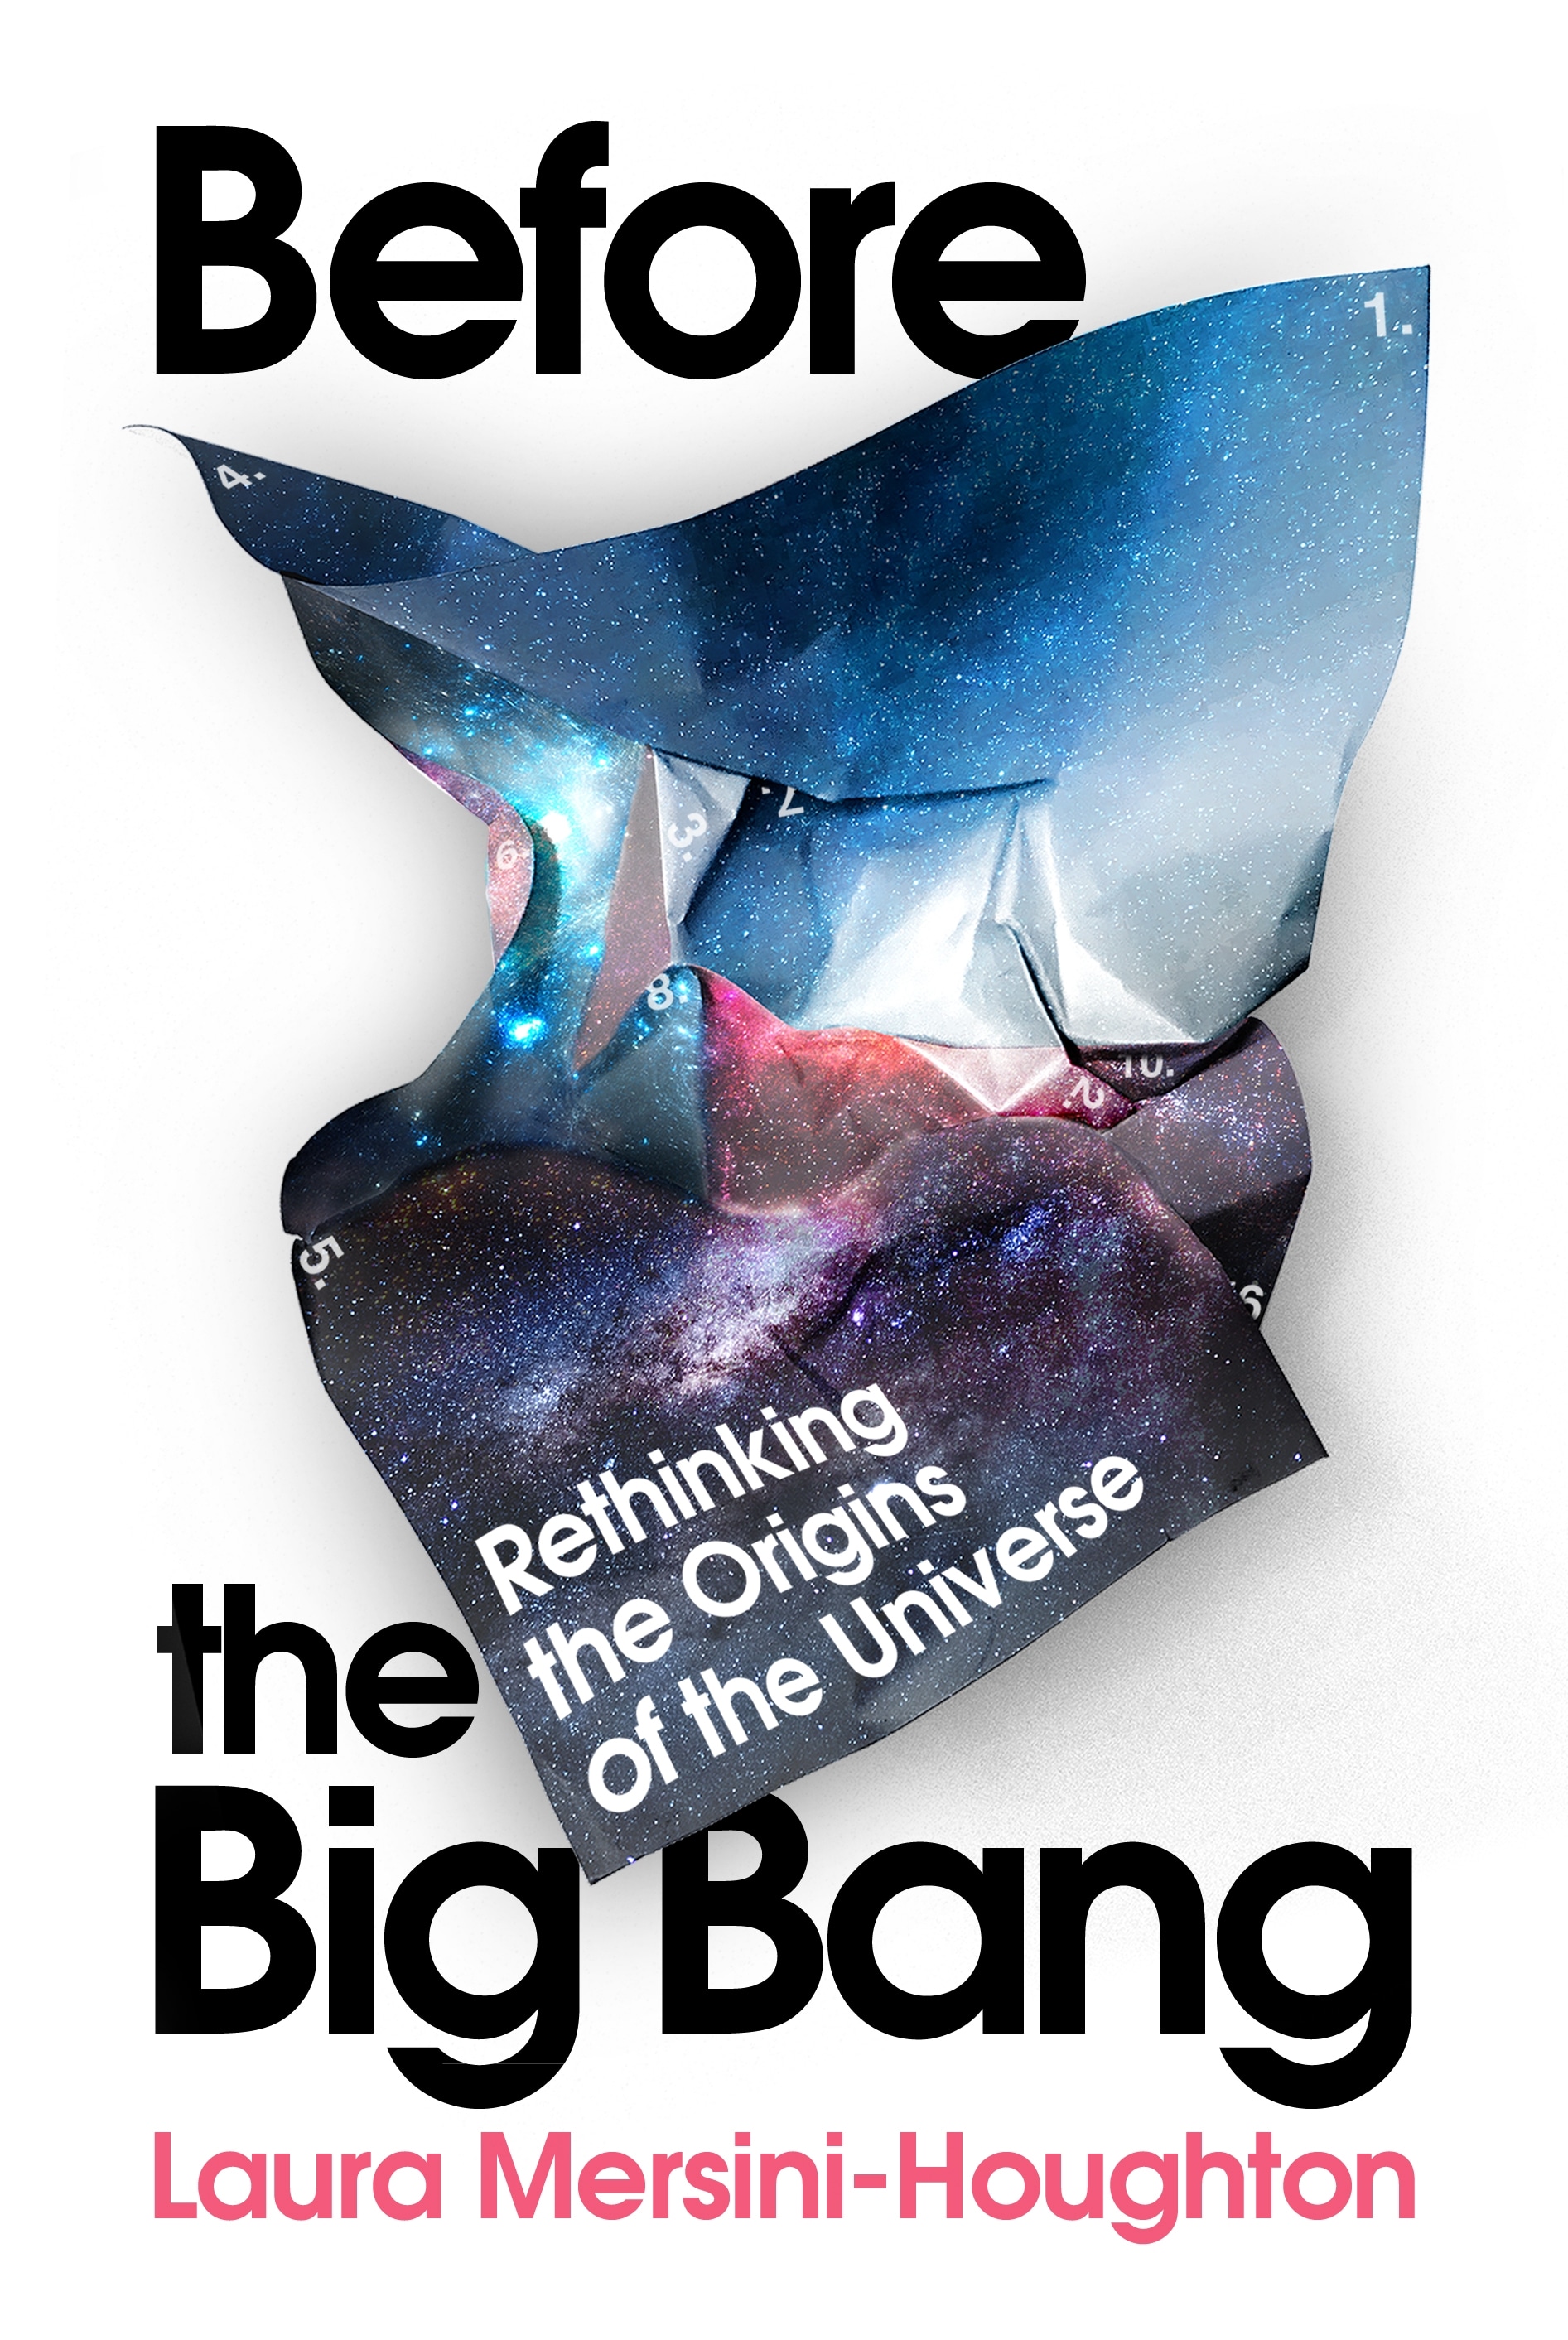 Book “Before the Big Bang” by Laura Mersini-Houghton — July 21, 2022